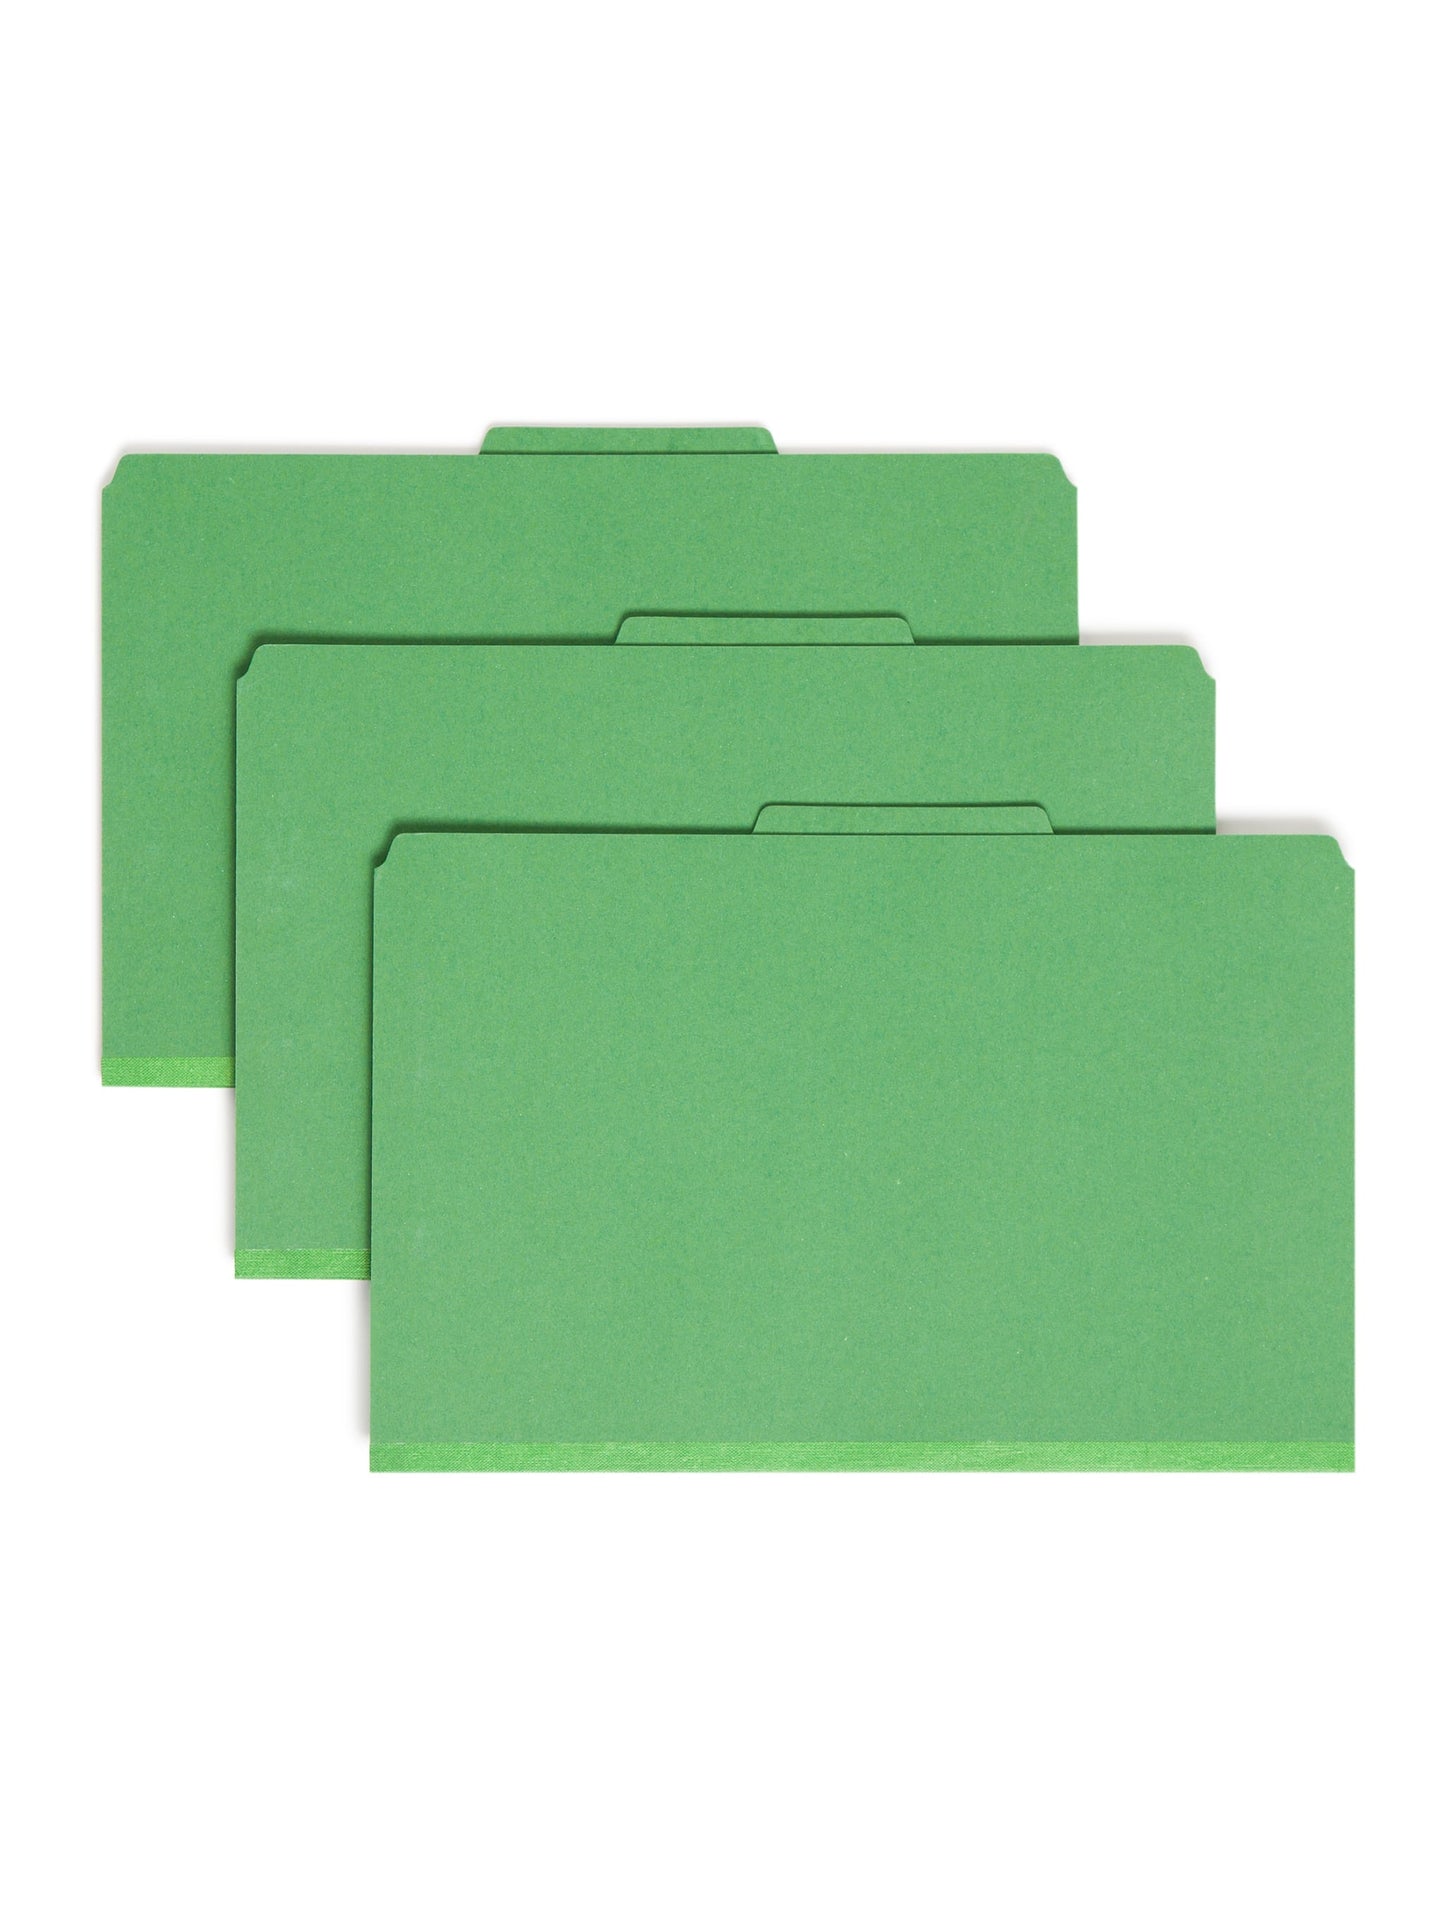 SafeSHIELD® Pressboard Classification File Folders with Pocket Dividers, Green Color, Legal Size, Set of 0, 30086486190832